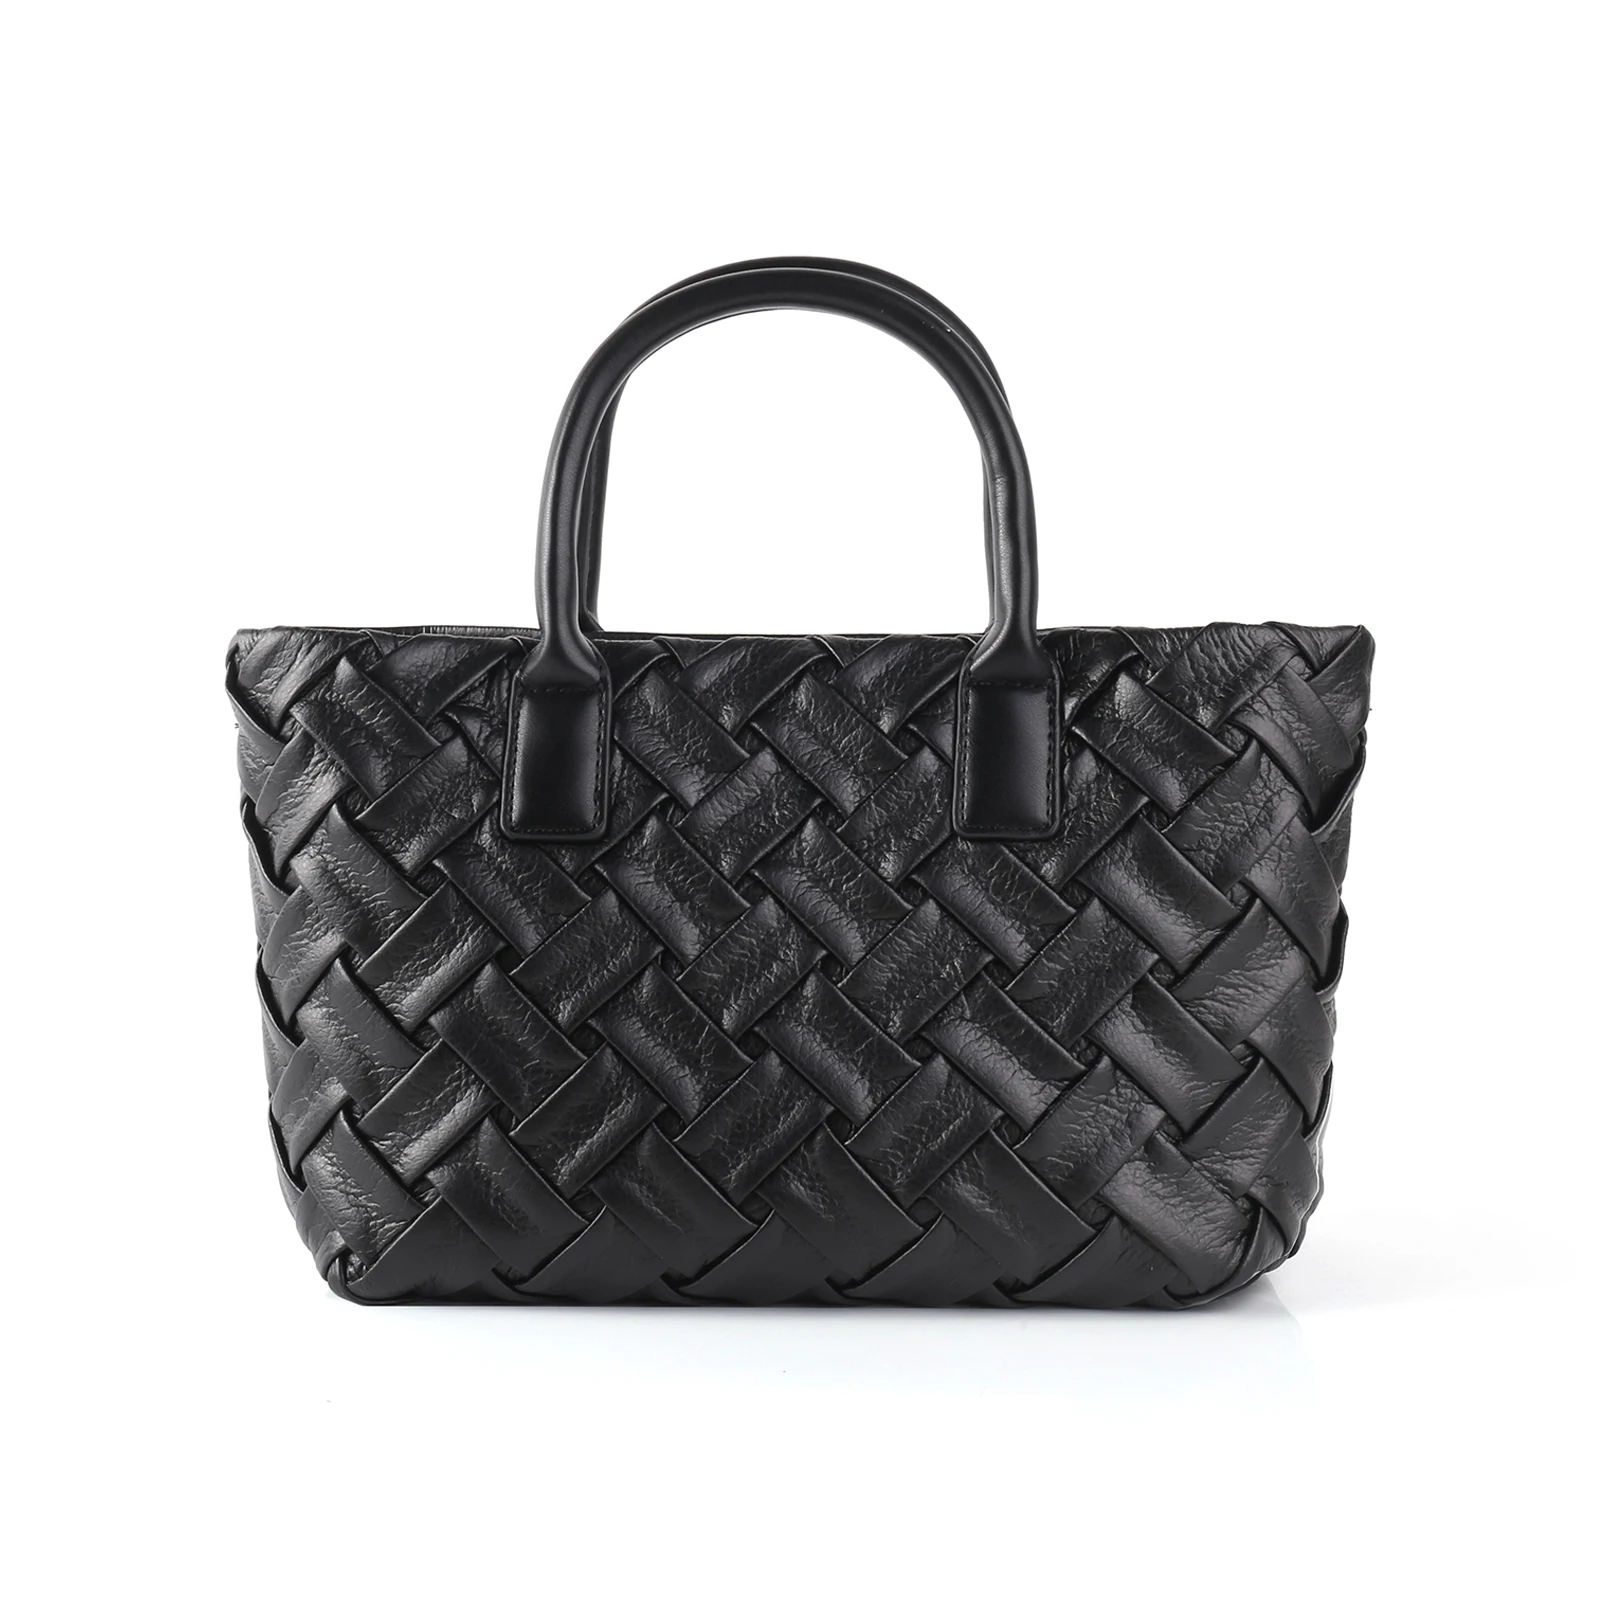 ZR DIARY Pleated Handbag Women PU Leather Side Woven Bag Versatile Commu... - $115.66